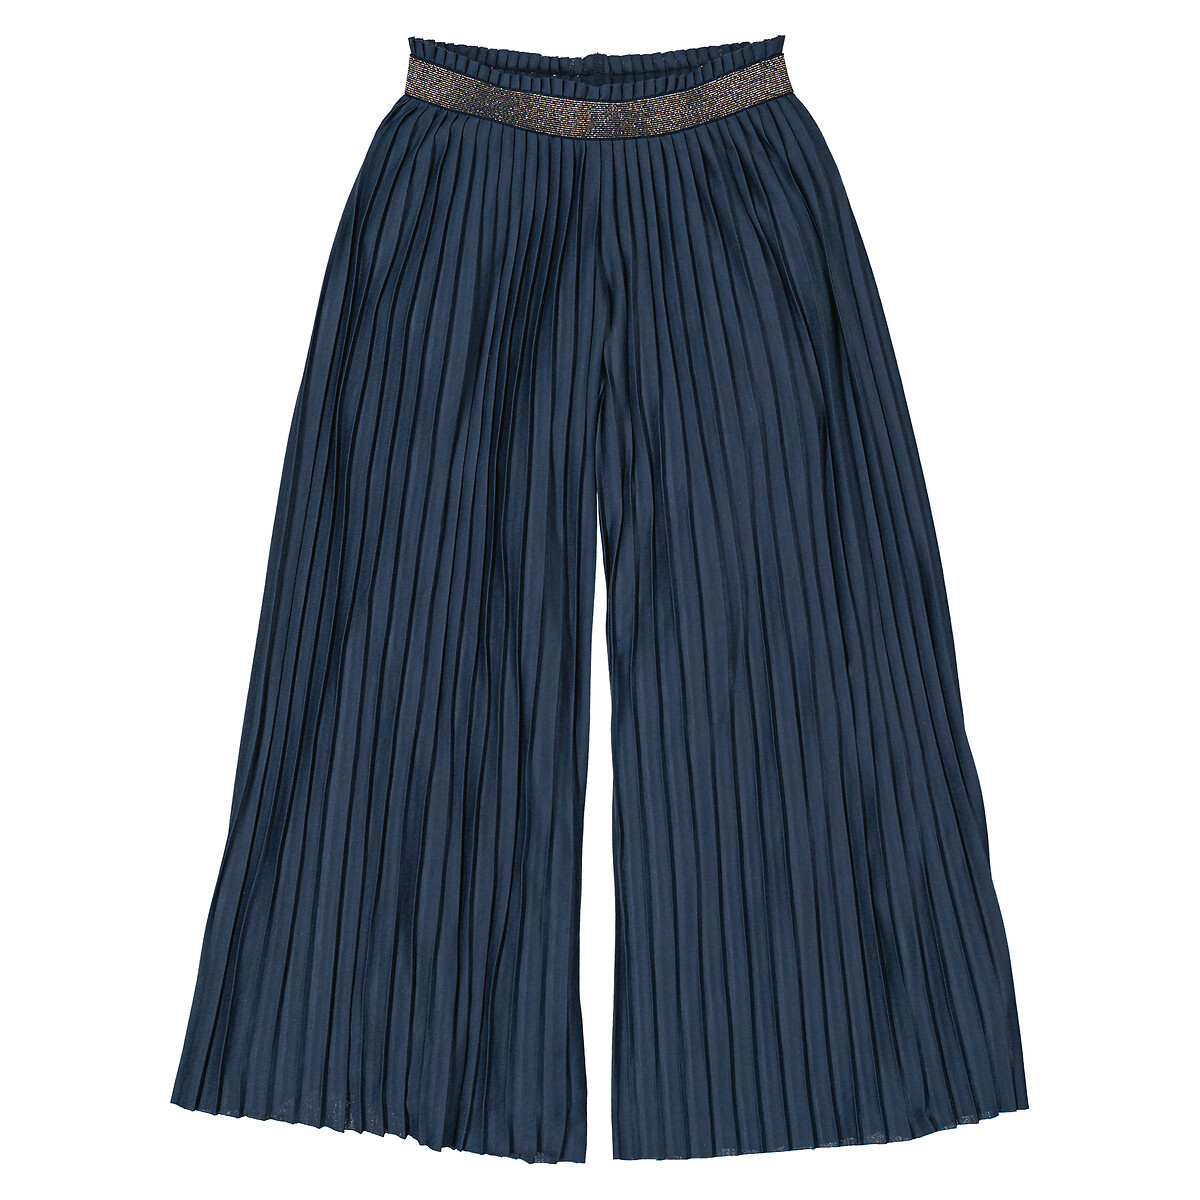 Plisserede bukser med brede ben La Redoute Collections | La Redoute